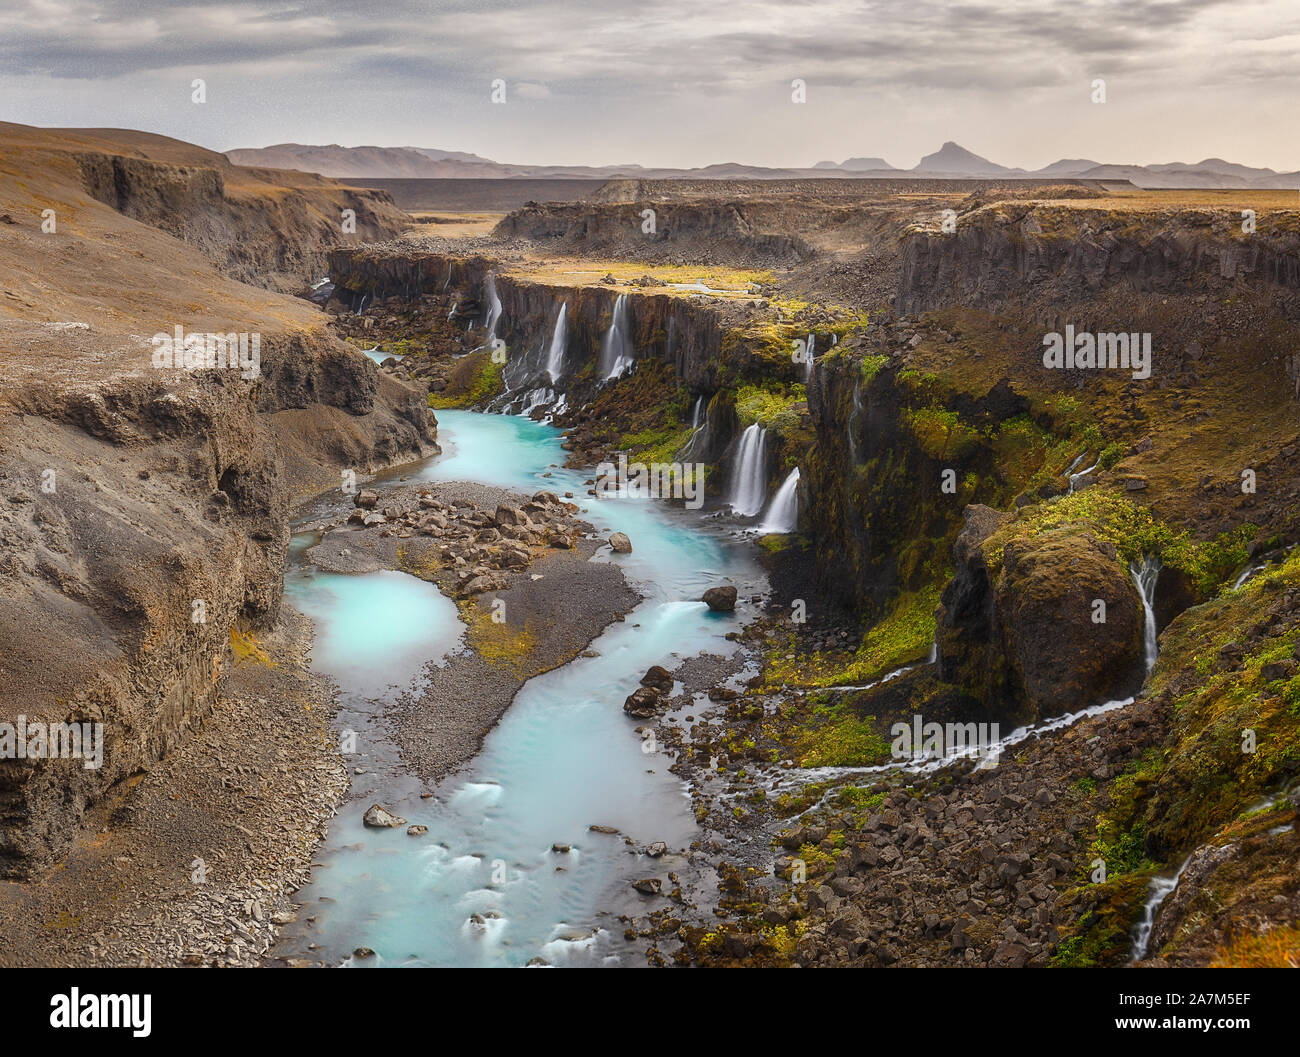 Sigoldugljufur, a Canyon with Waterfalls in Iceland Stock Photo